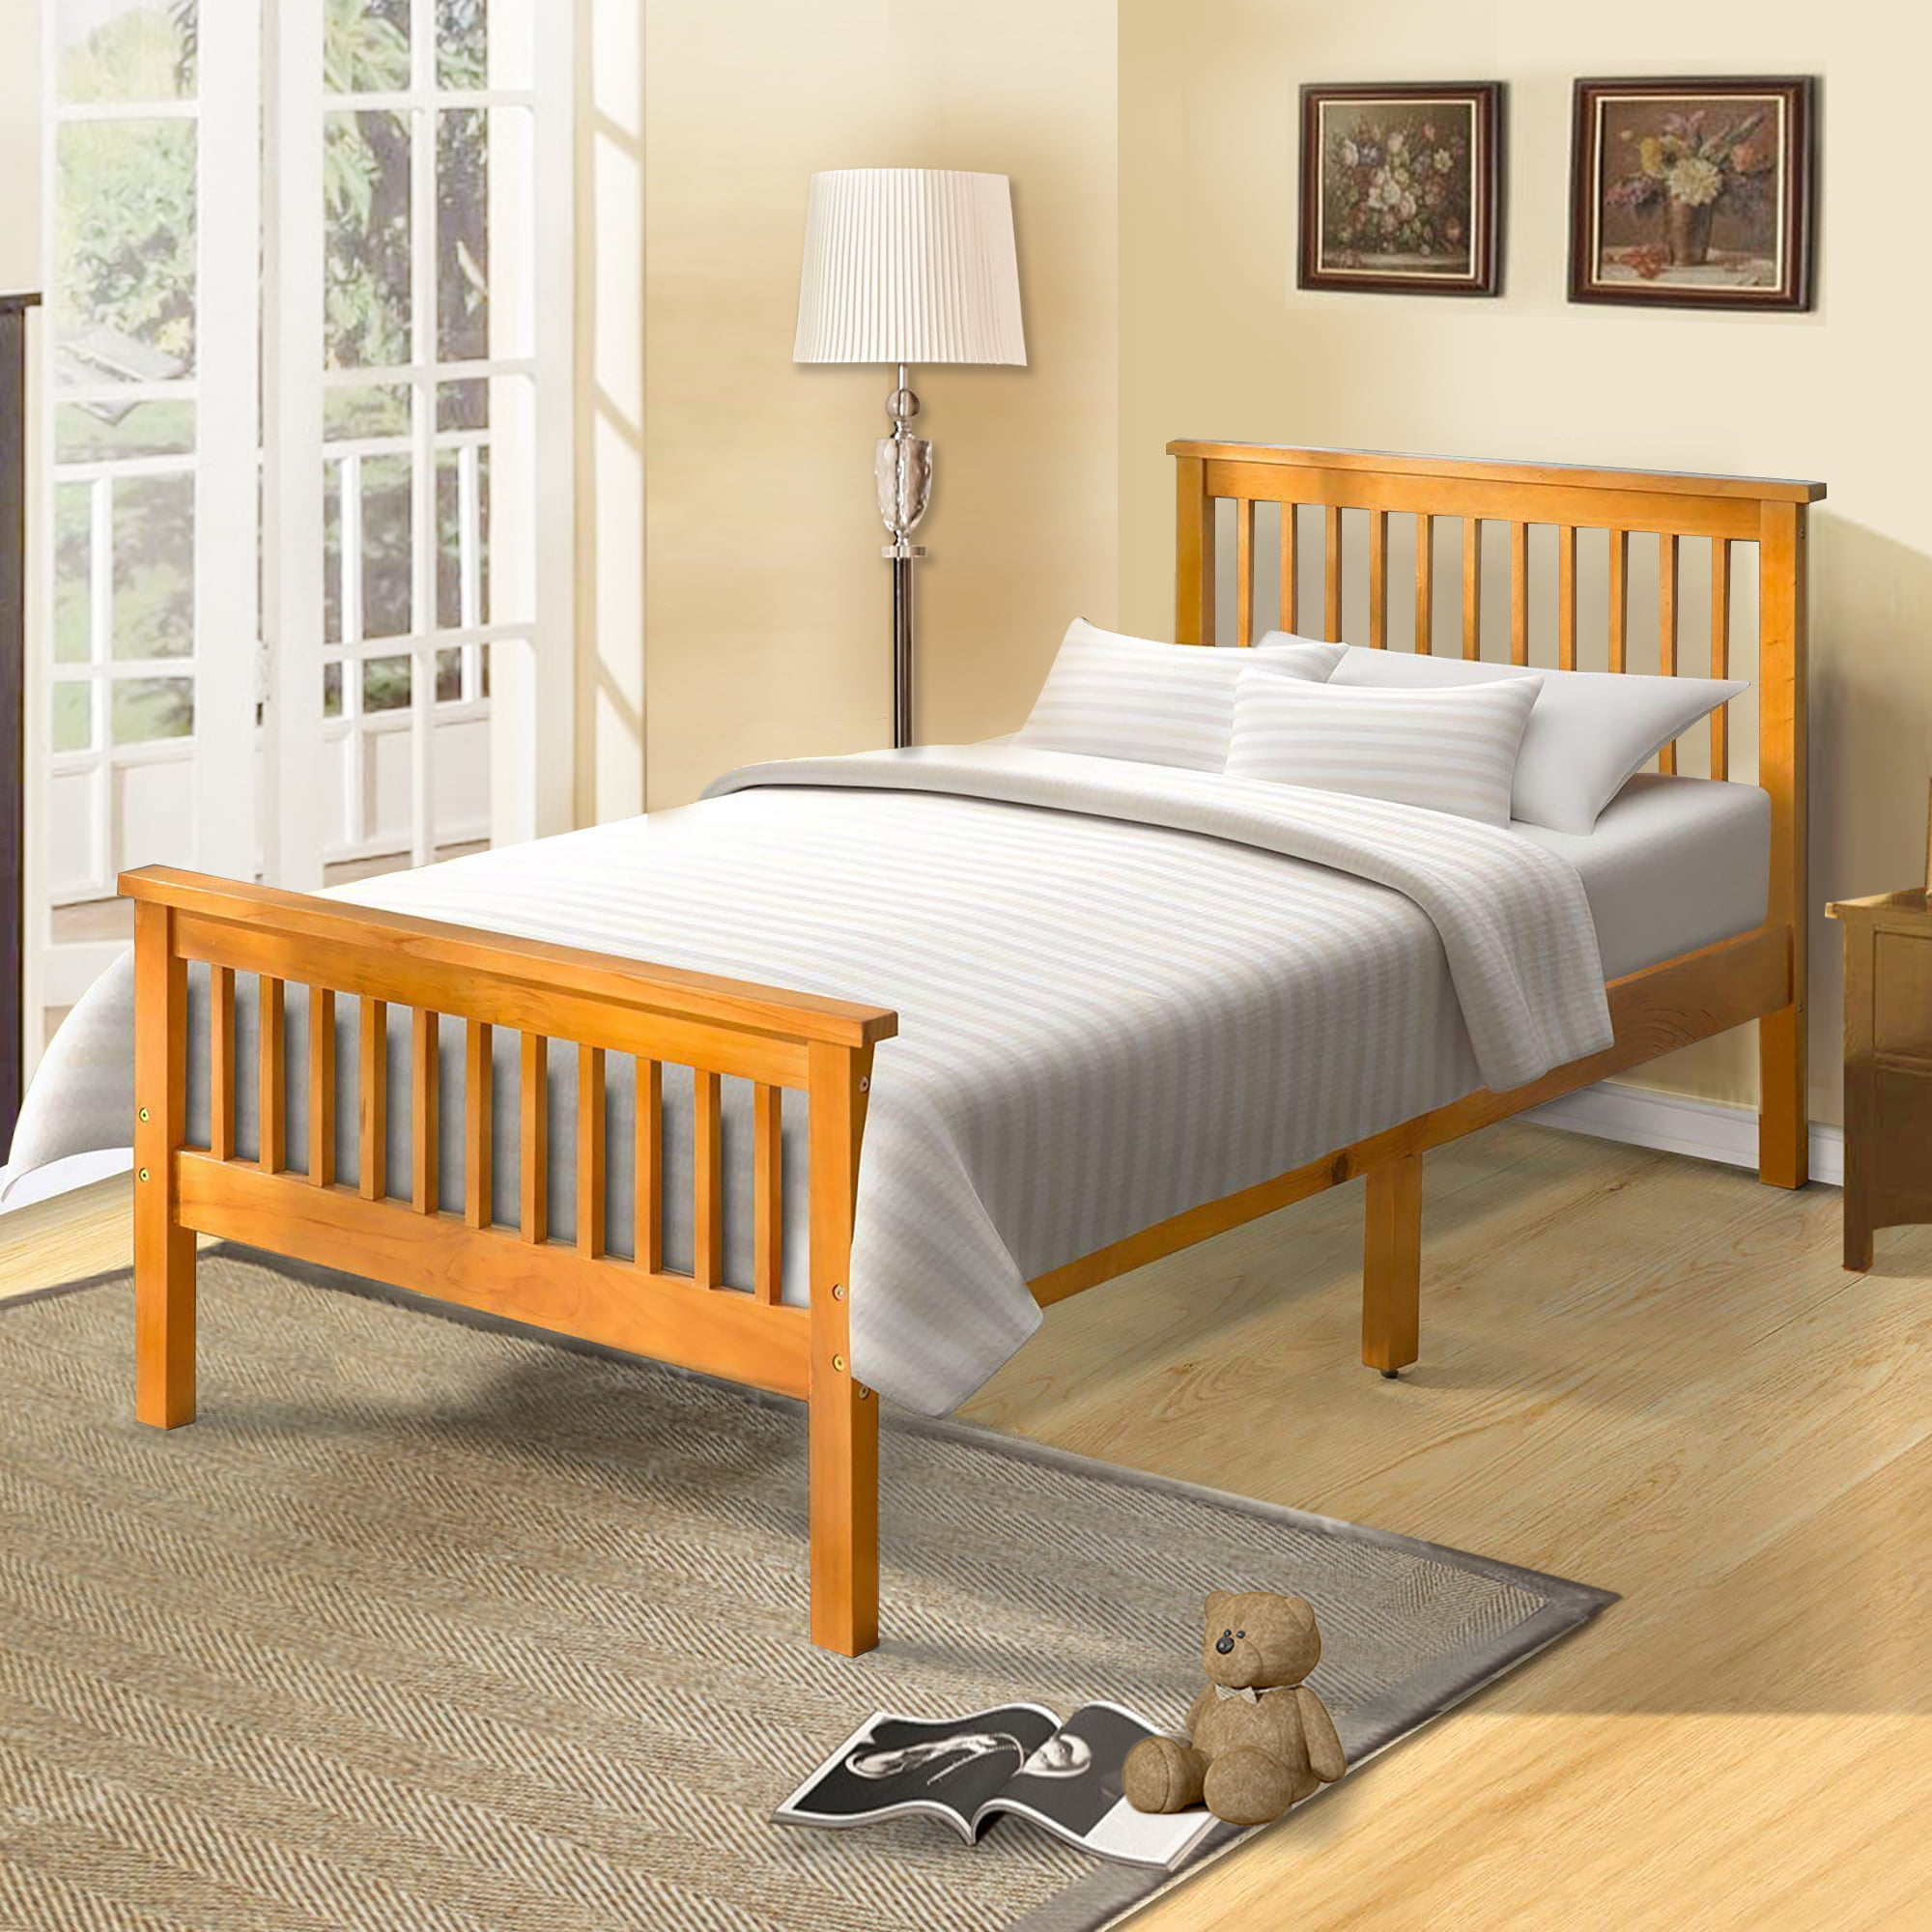 JUMPER Bed Solid Wood Platform Bed Frame with Headboard, Footboard, and Wood Slat Support